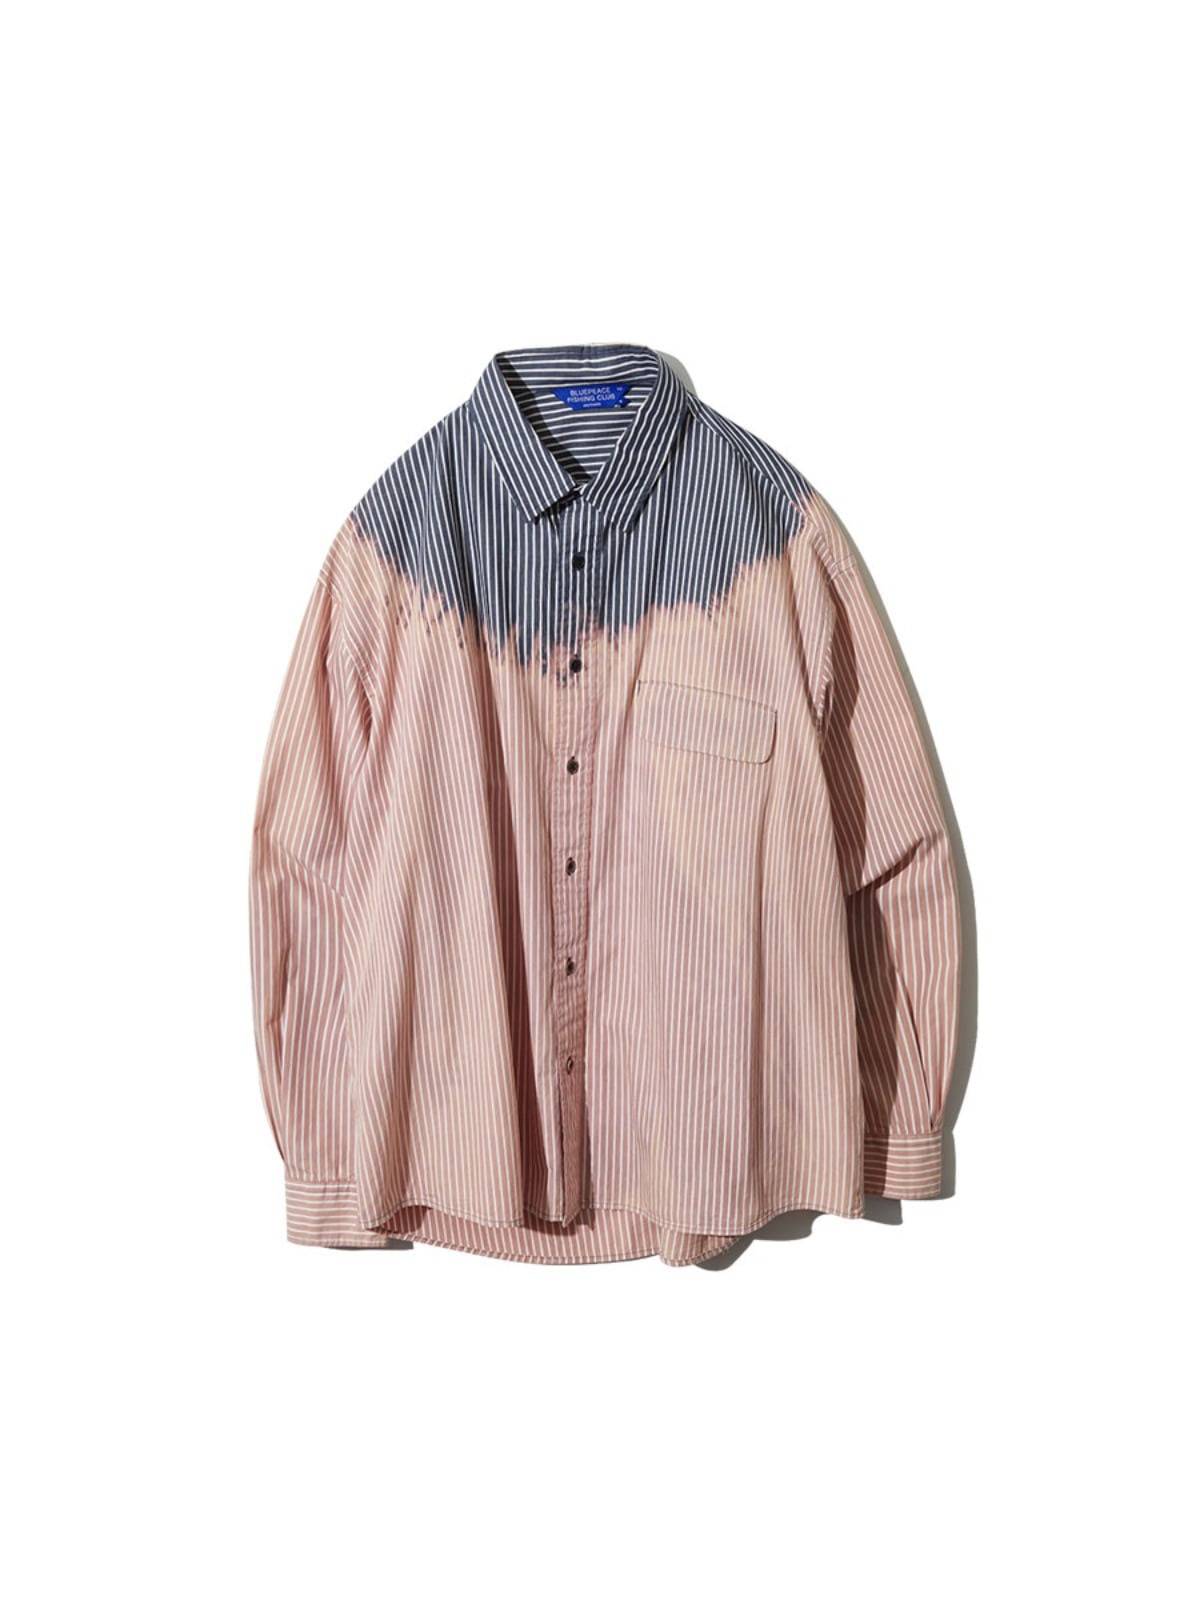 Half Dyed 222 Oversized Shirt (Black/Pink Stripe)